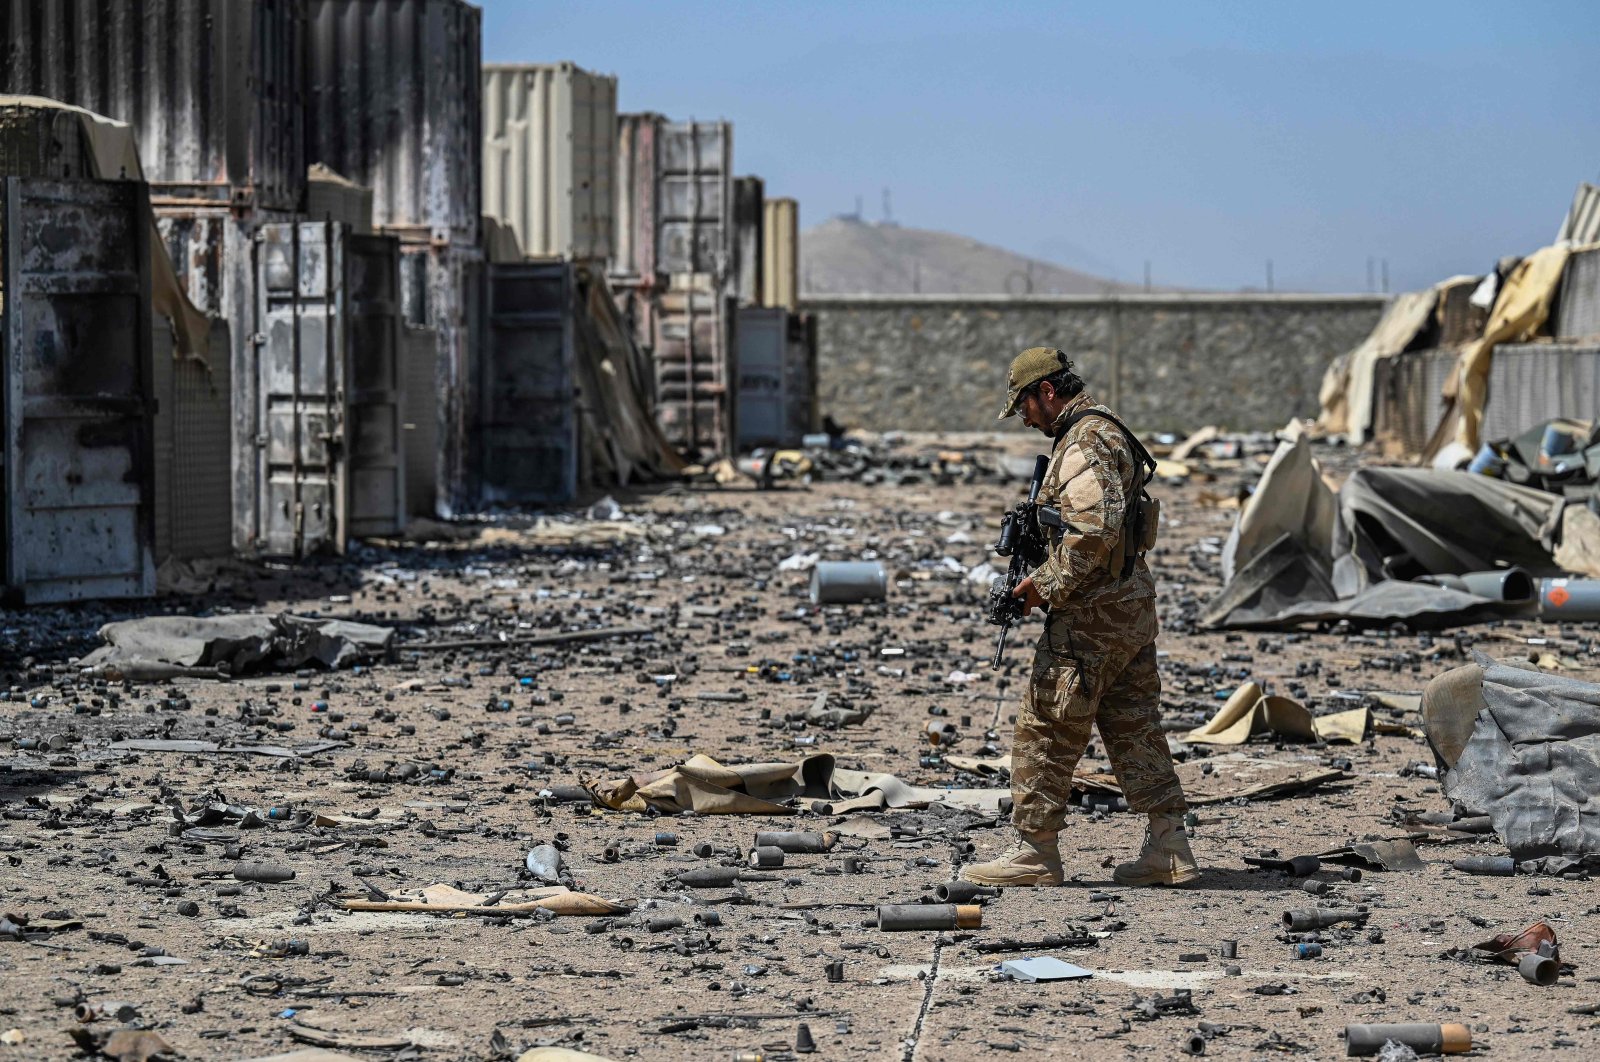 Taliban membunuh, menculik mantan pejabat Afghanistan, pasukan keamanan: HRW